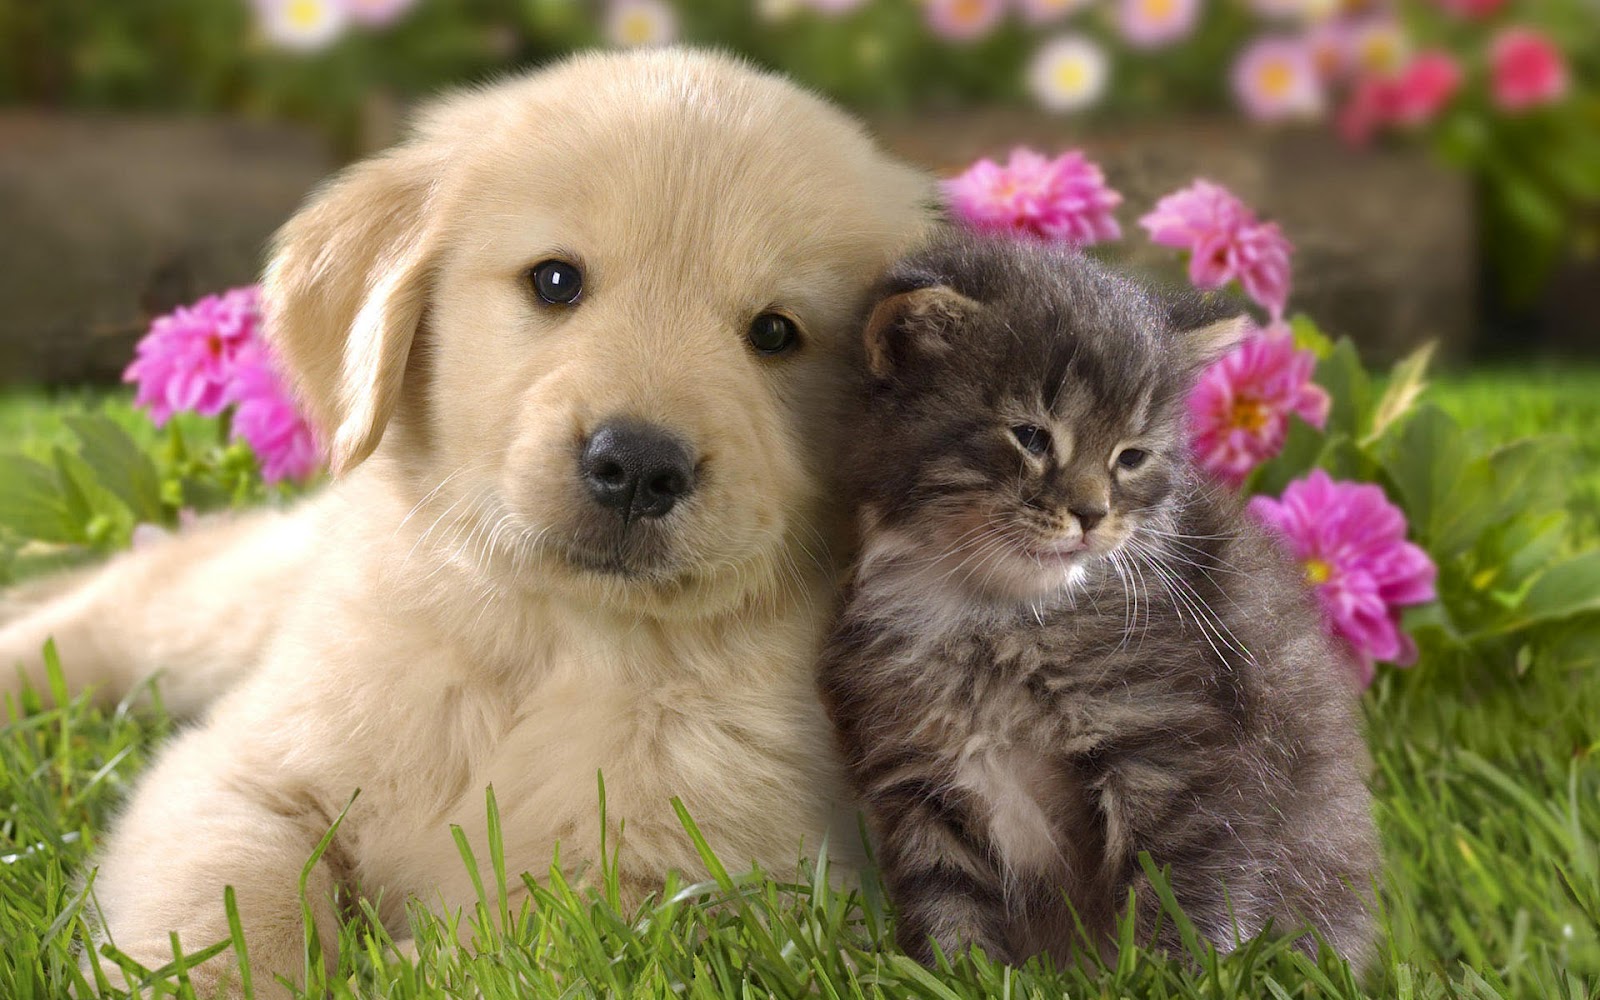 HD Cats Wallpaper Cute Cat And Dog Cuddling Background Jpg